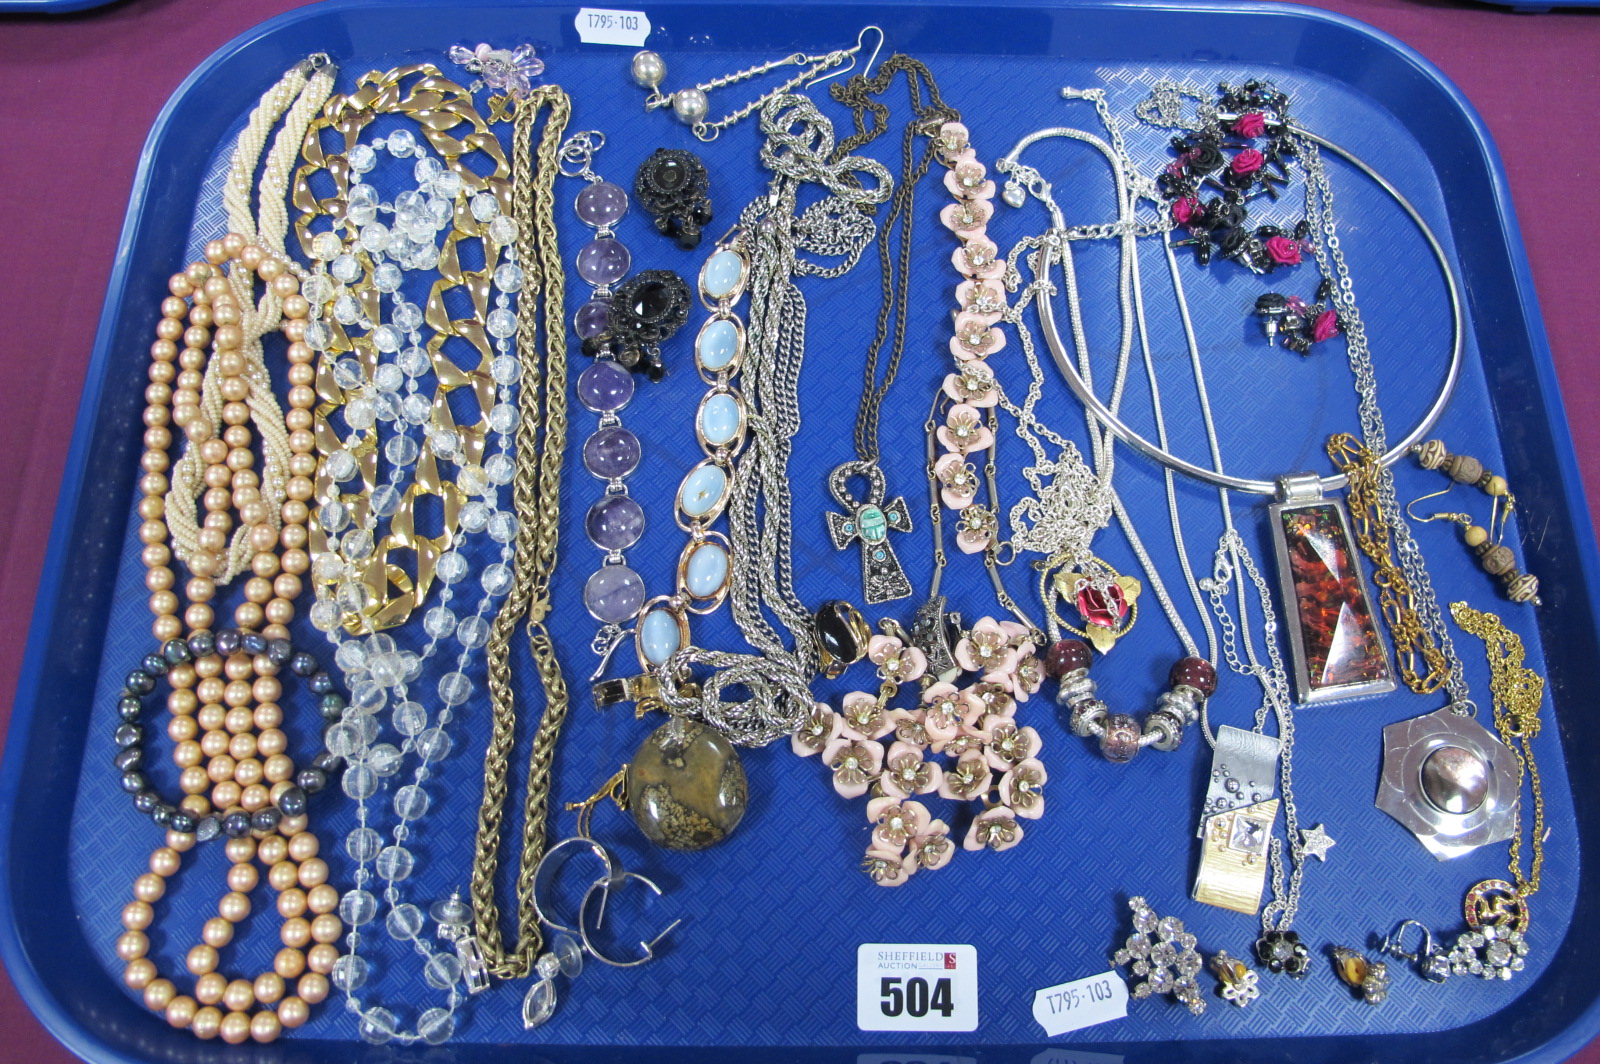 Imitation Pearl Bead Necklaces, panel style bracelets, ornate floral necklaces, a modern sliding